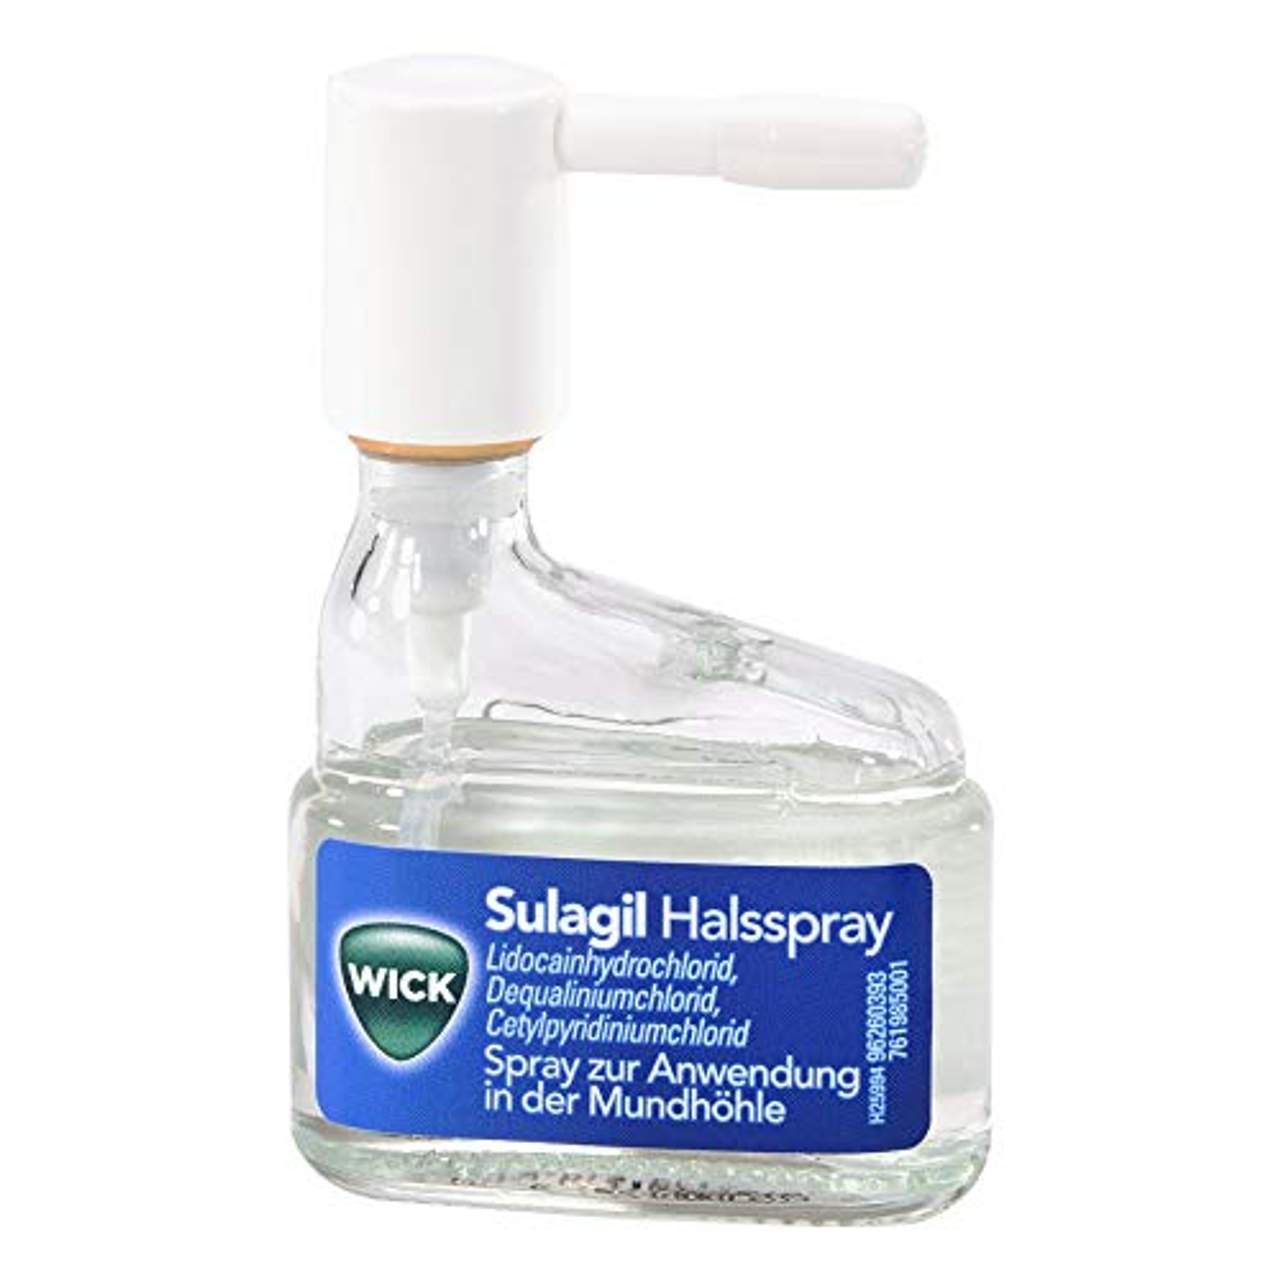 Wick Sulagil Halsspray 15 ml Lösung